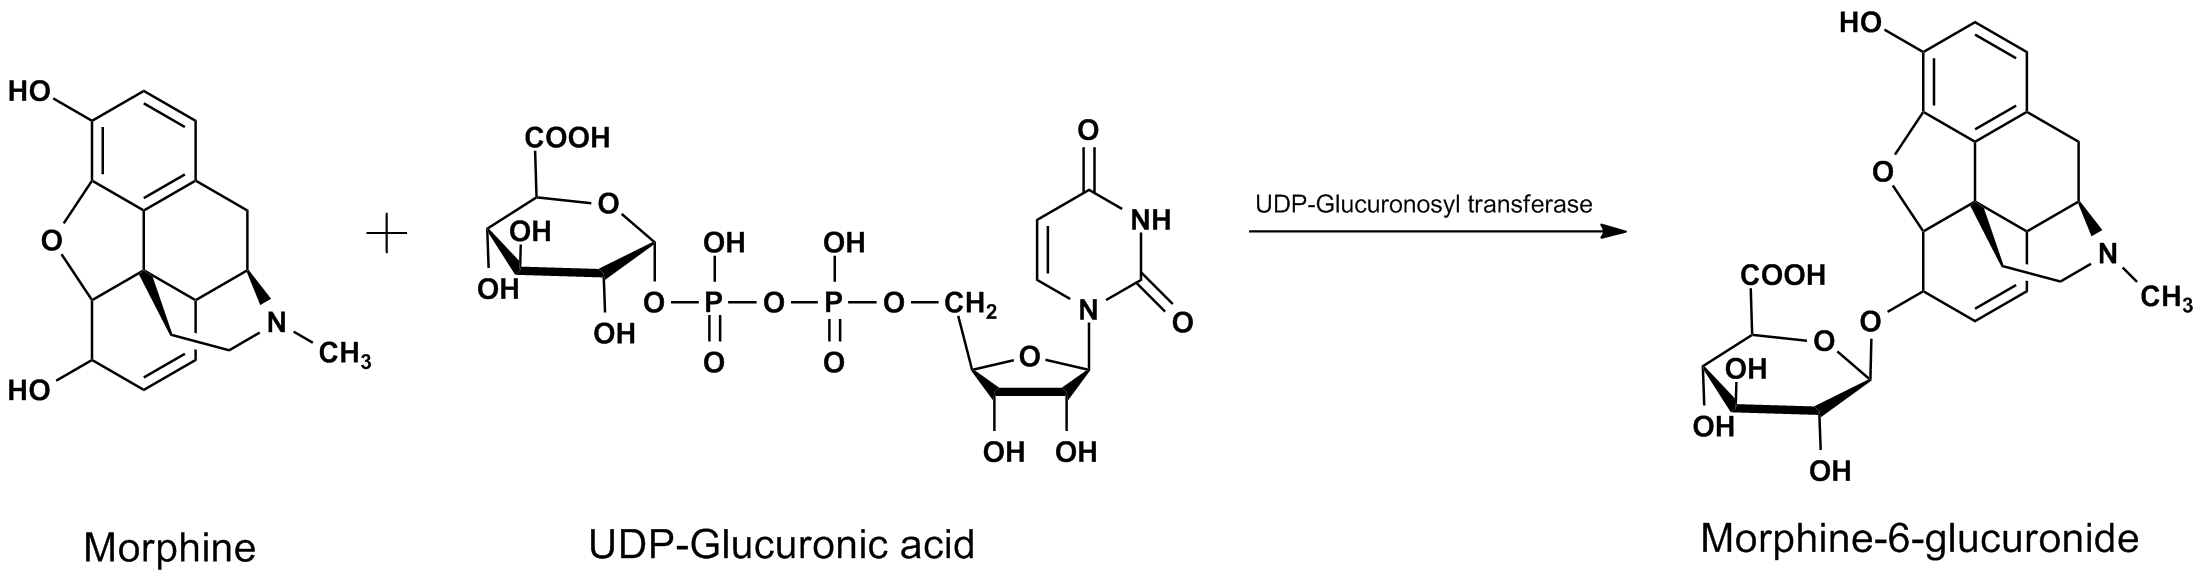 Glucuronidation Reaction Mechanism